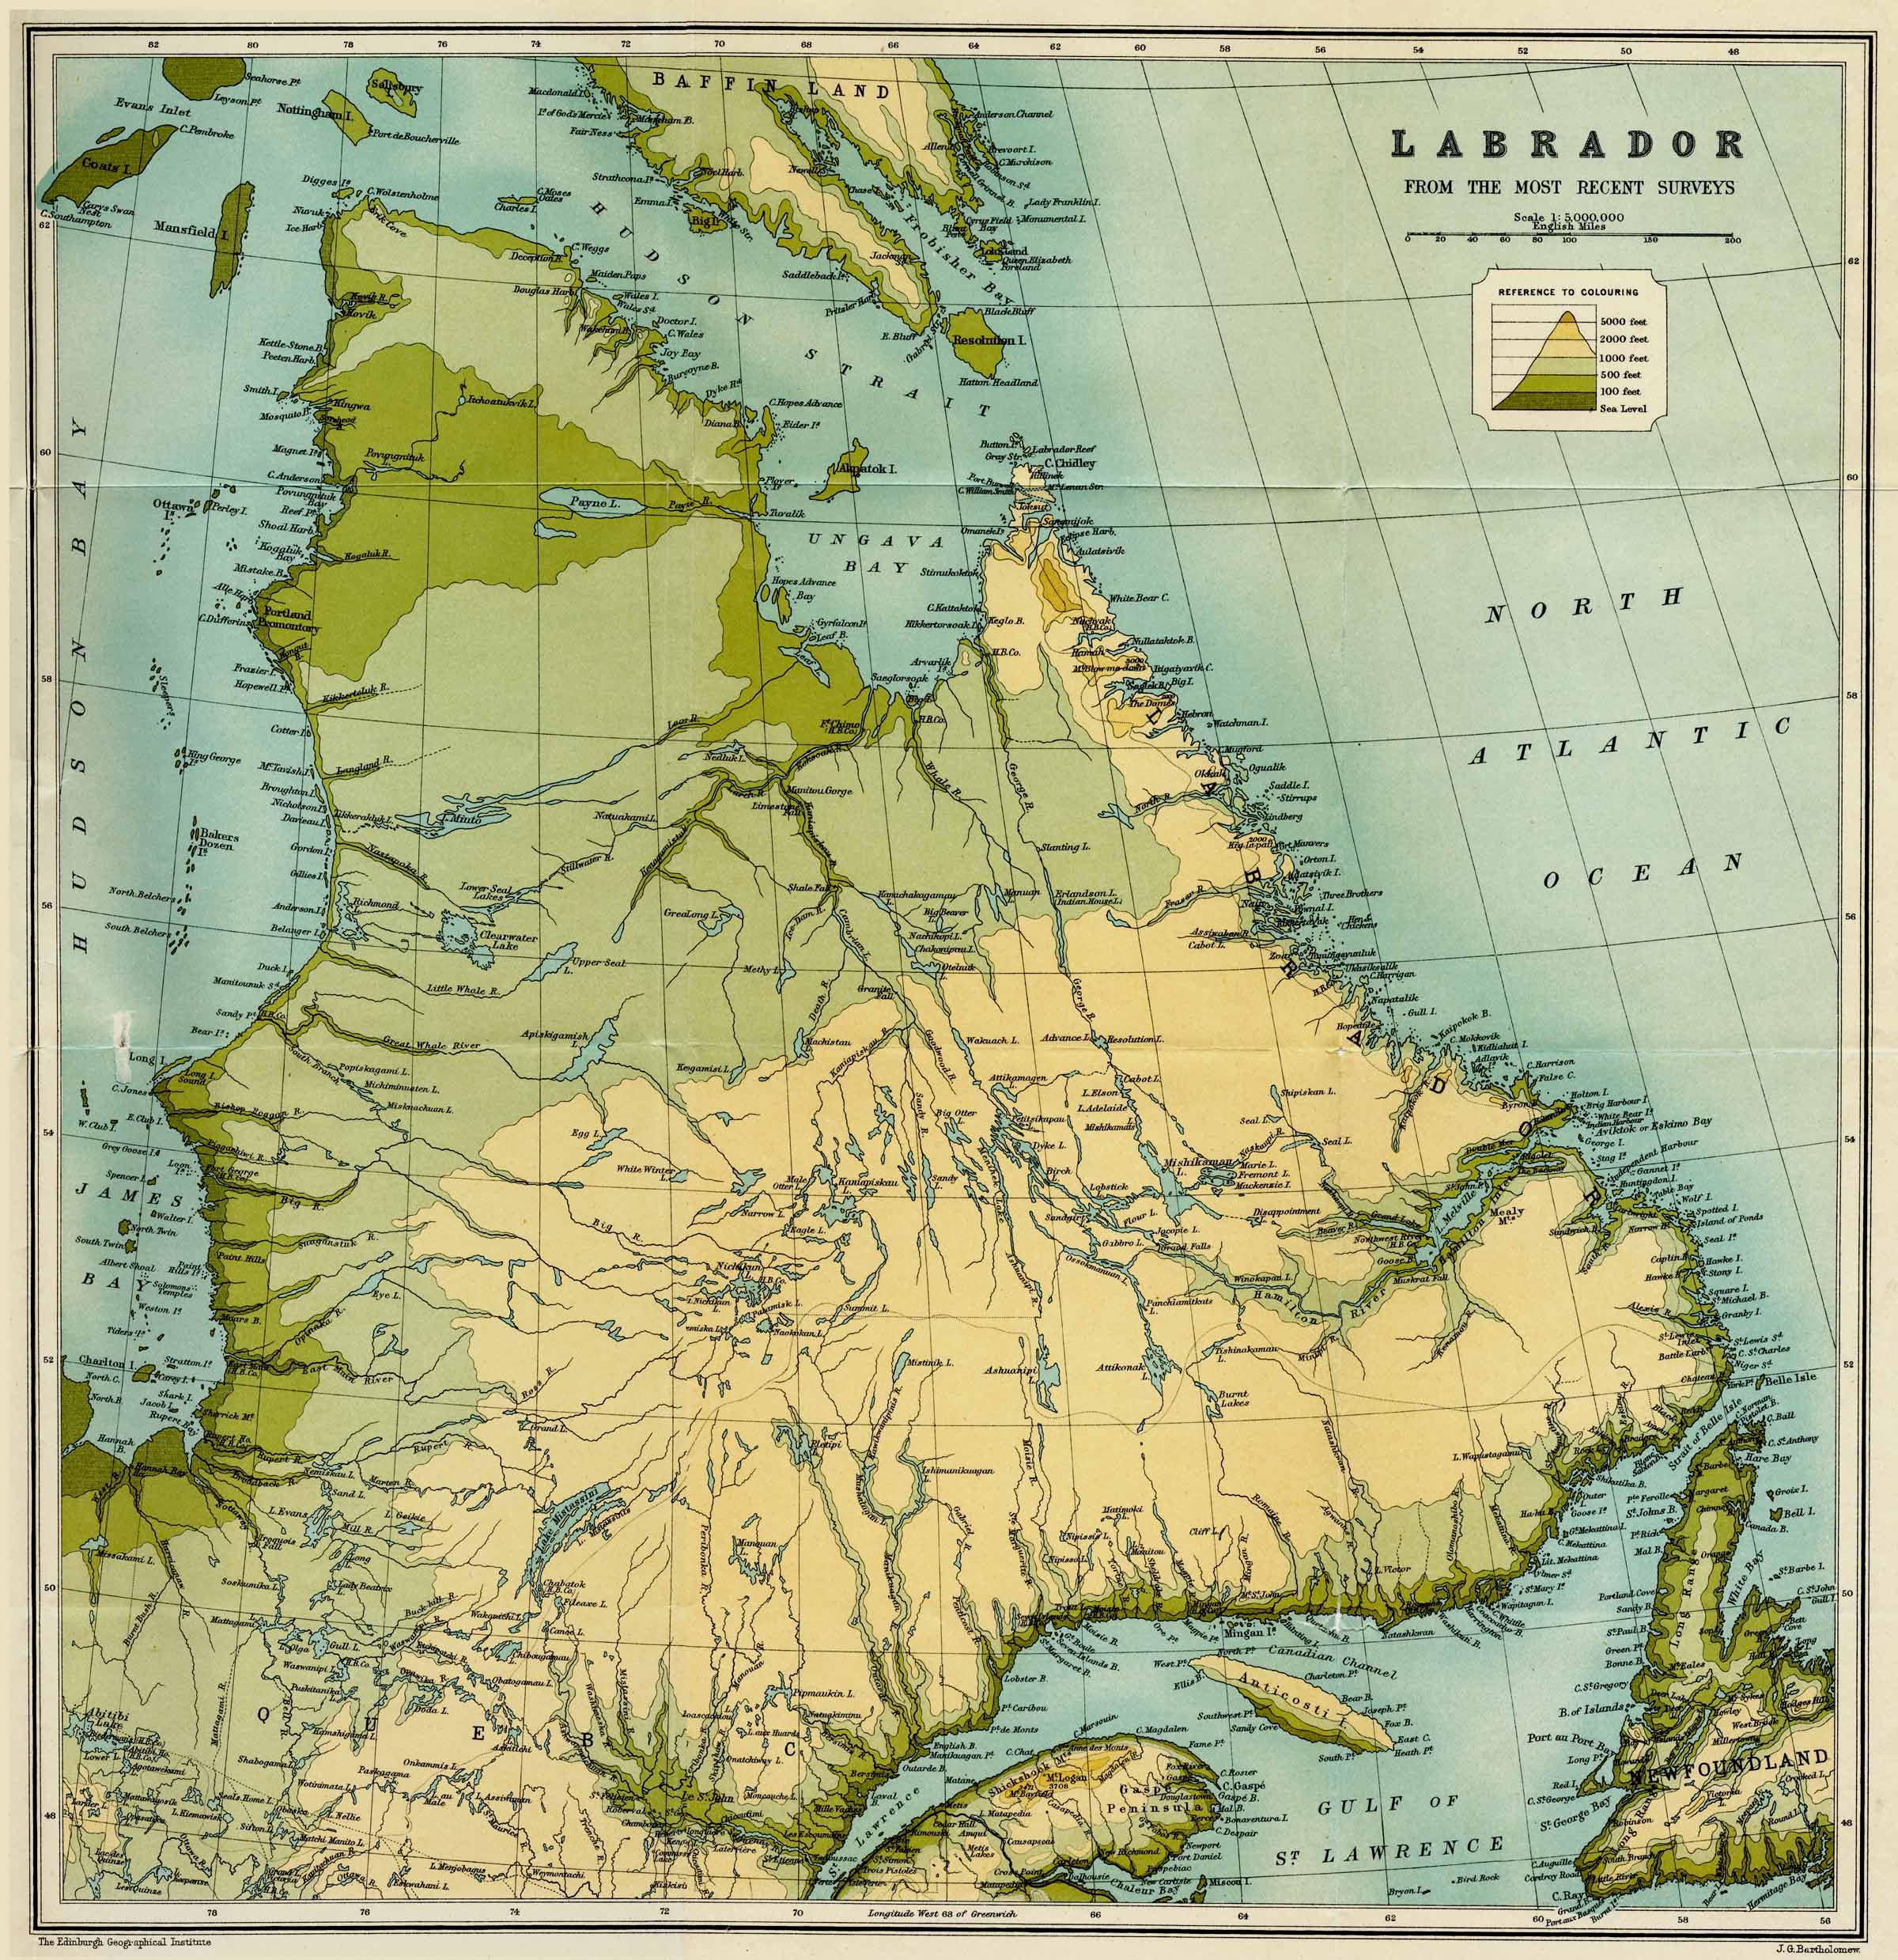 Map of Labrador by J.G. Bartholomew, ca. 1895